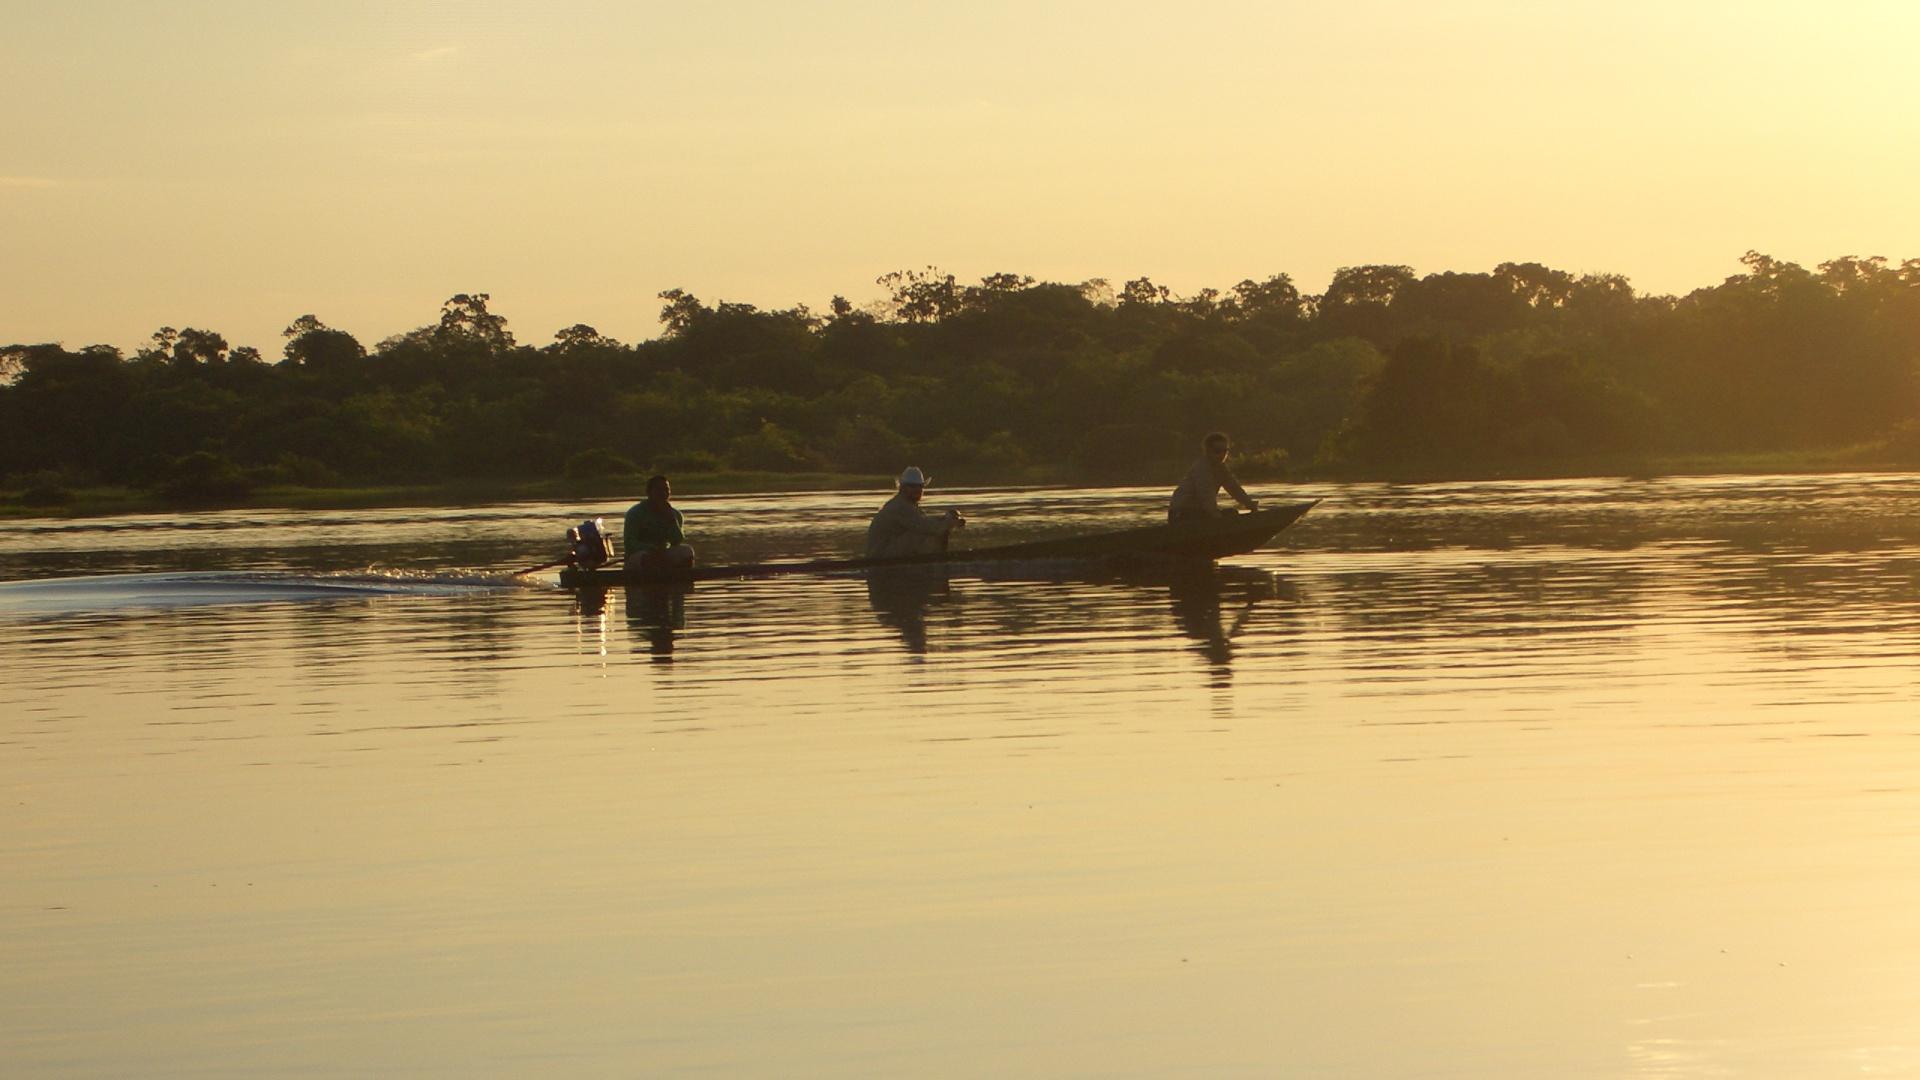 Typical Amazon Boats at a riverbank